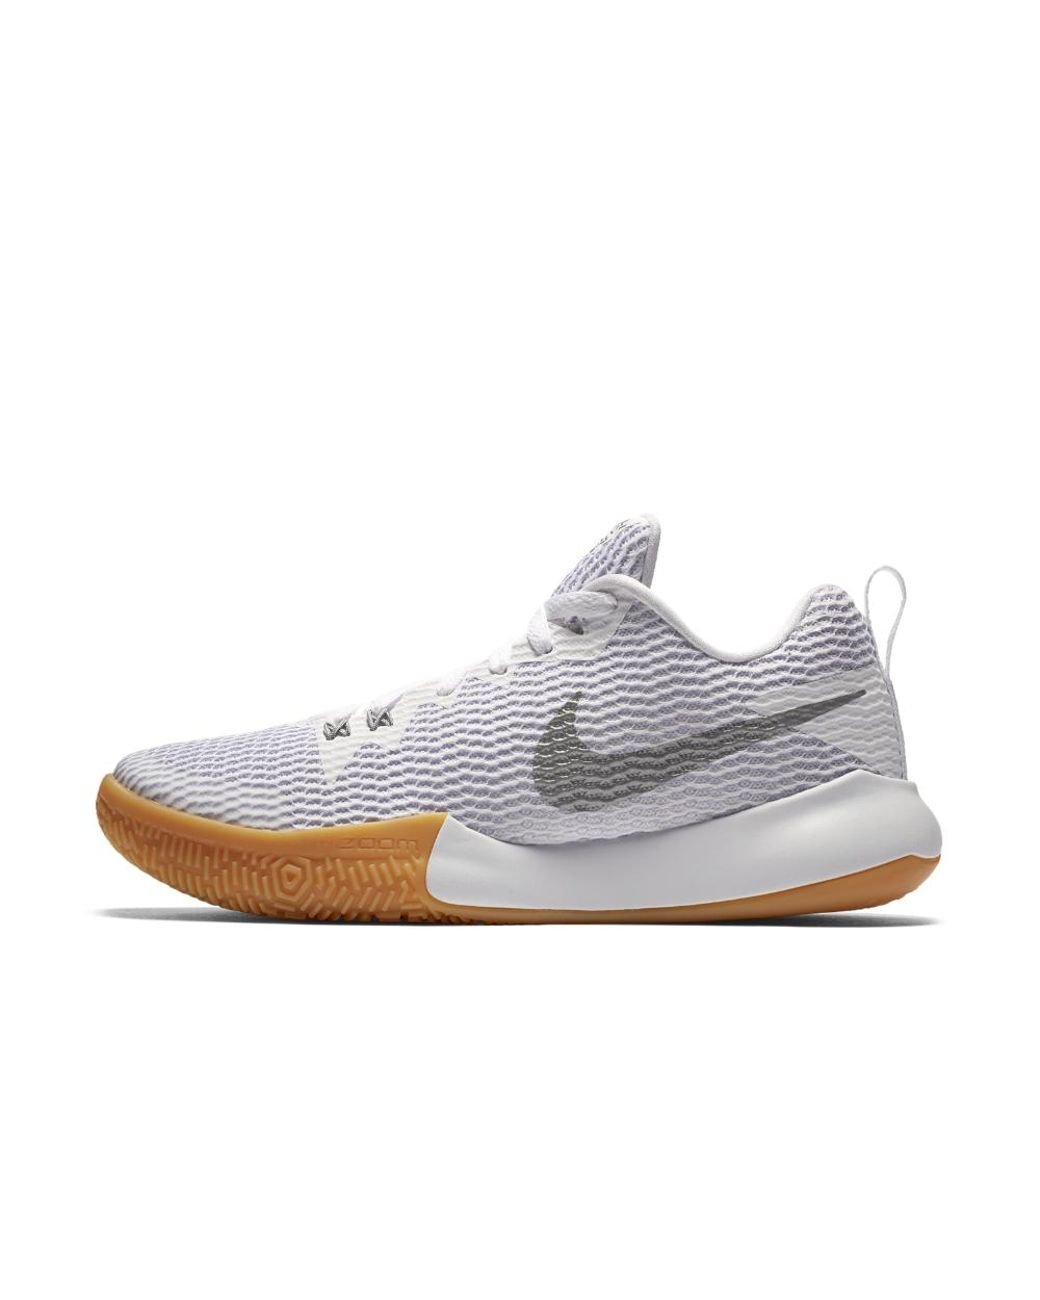 Nike Zoom Live Ii Women's Basketball Shoe in White | Lyst